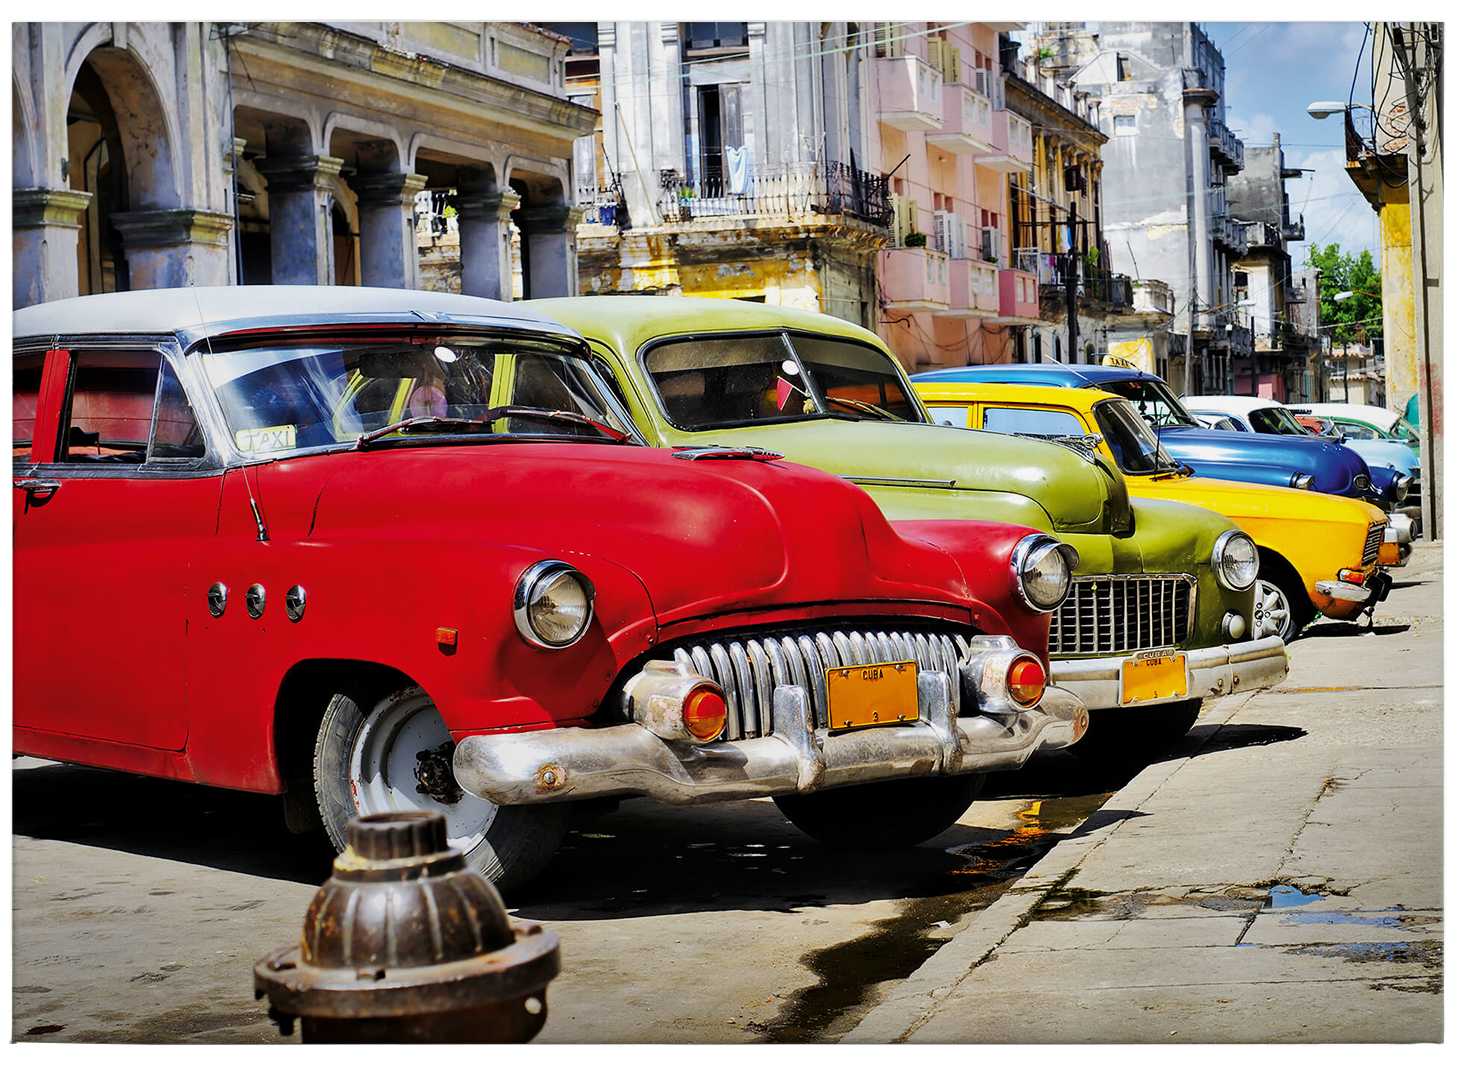             Cuba canvas print vintage cars in Havana
        